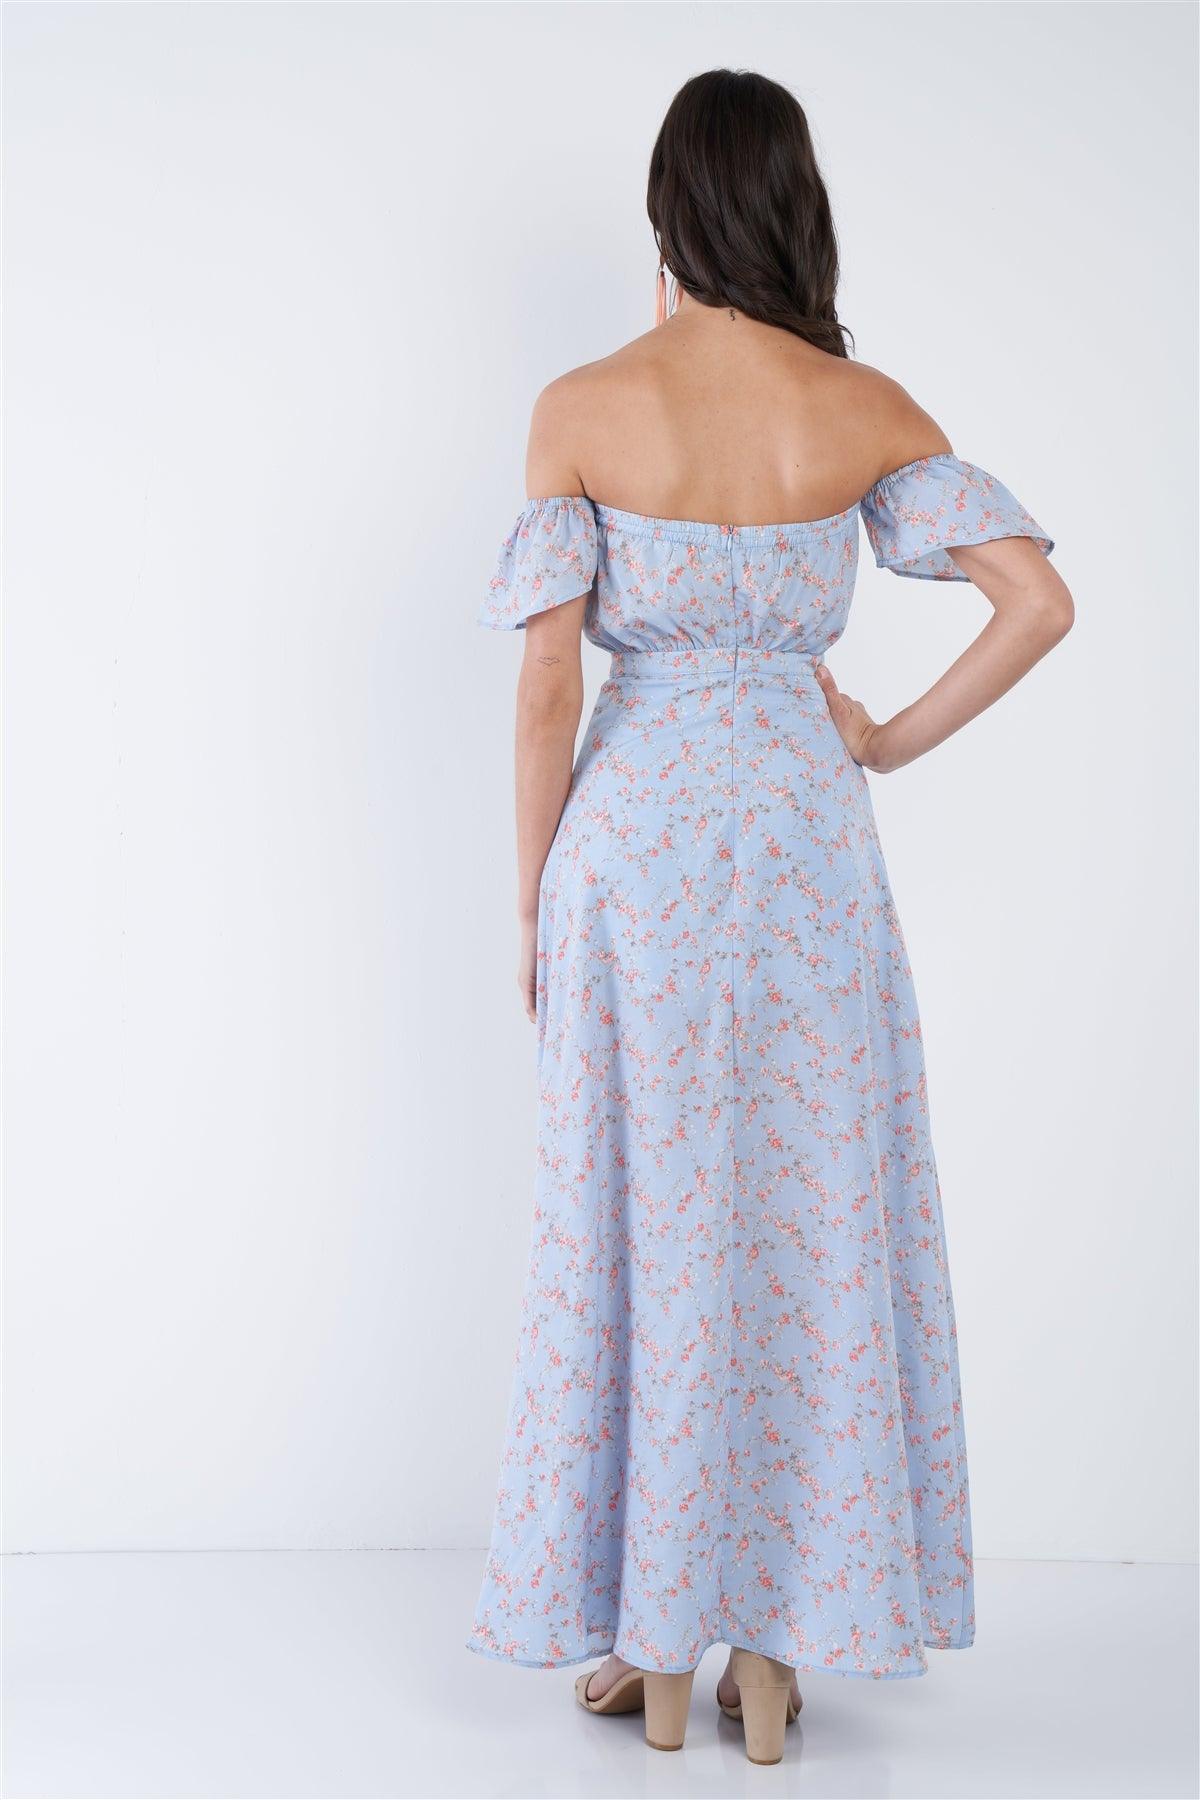 Sky Blue Boho Floral Off-The-Shoulder Maxi Dress   /4-2-1